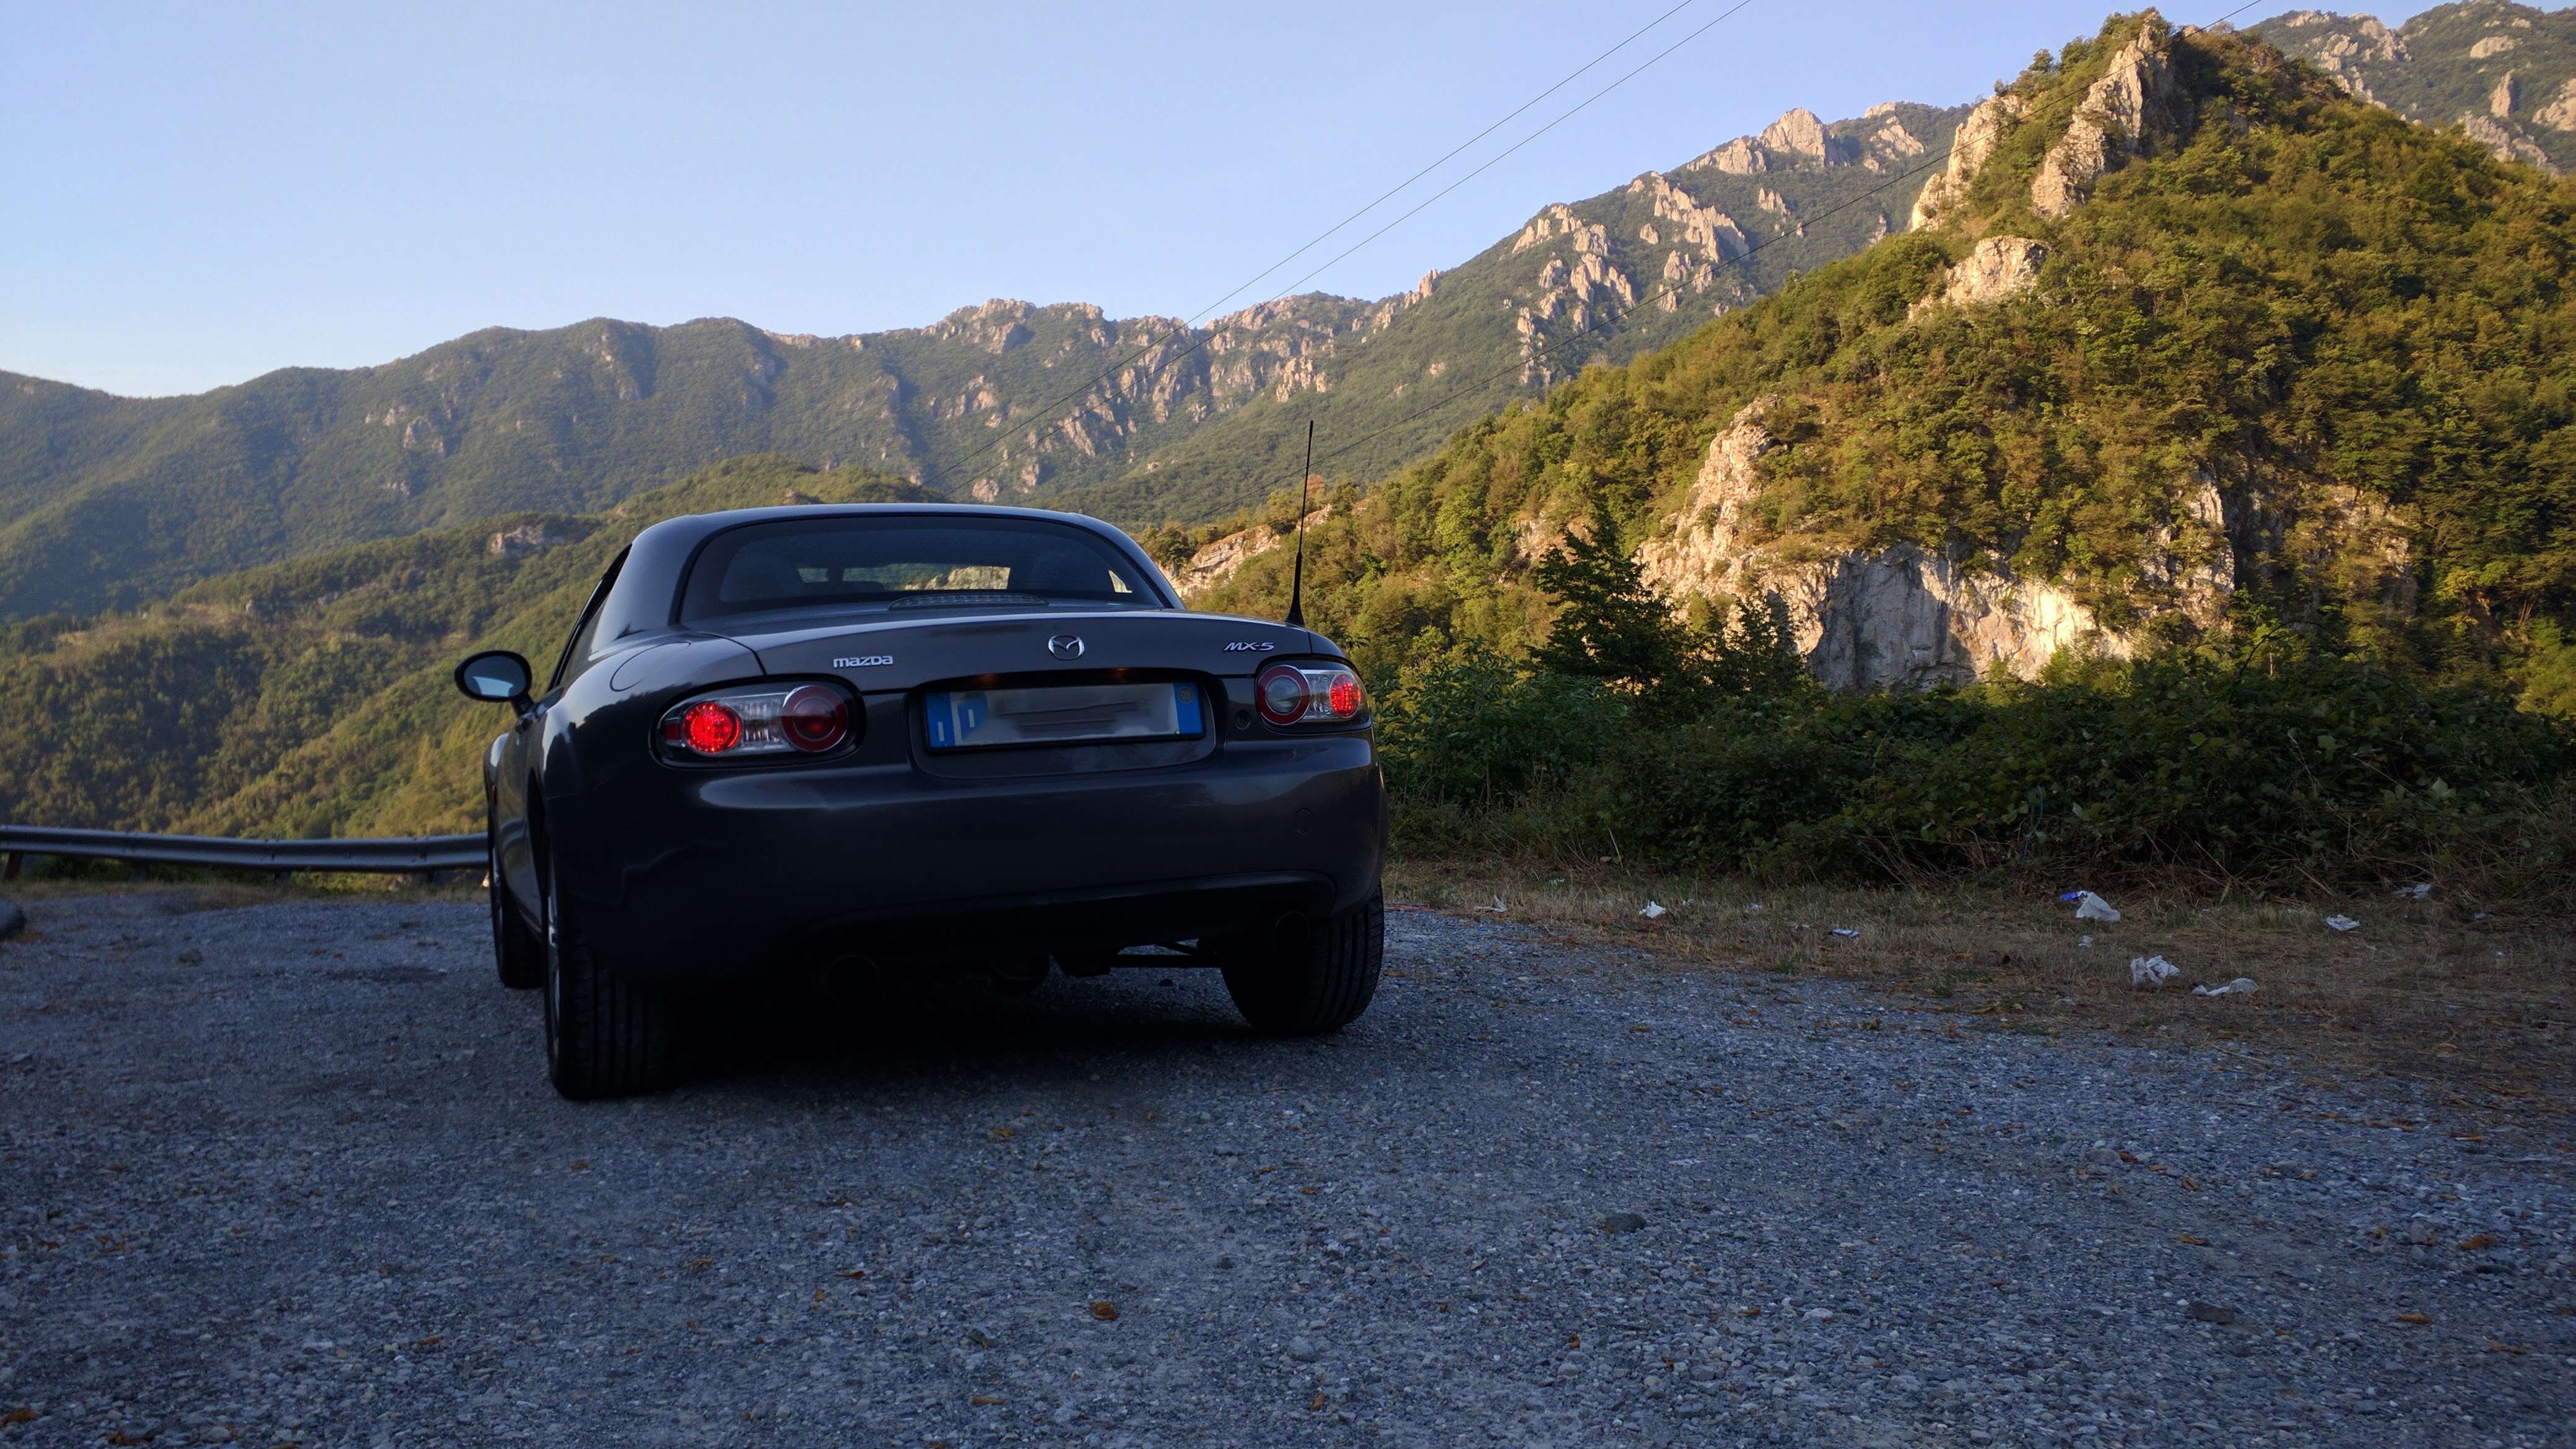 General 4160x2340 Italy Liguria Mazda MX-5 landscape car vehicle black cars Mazda